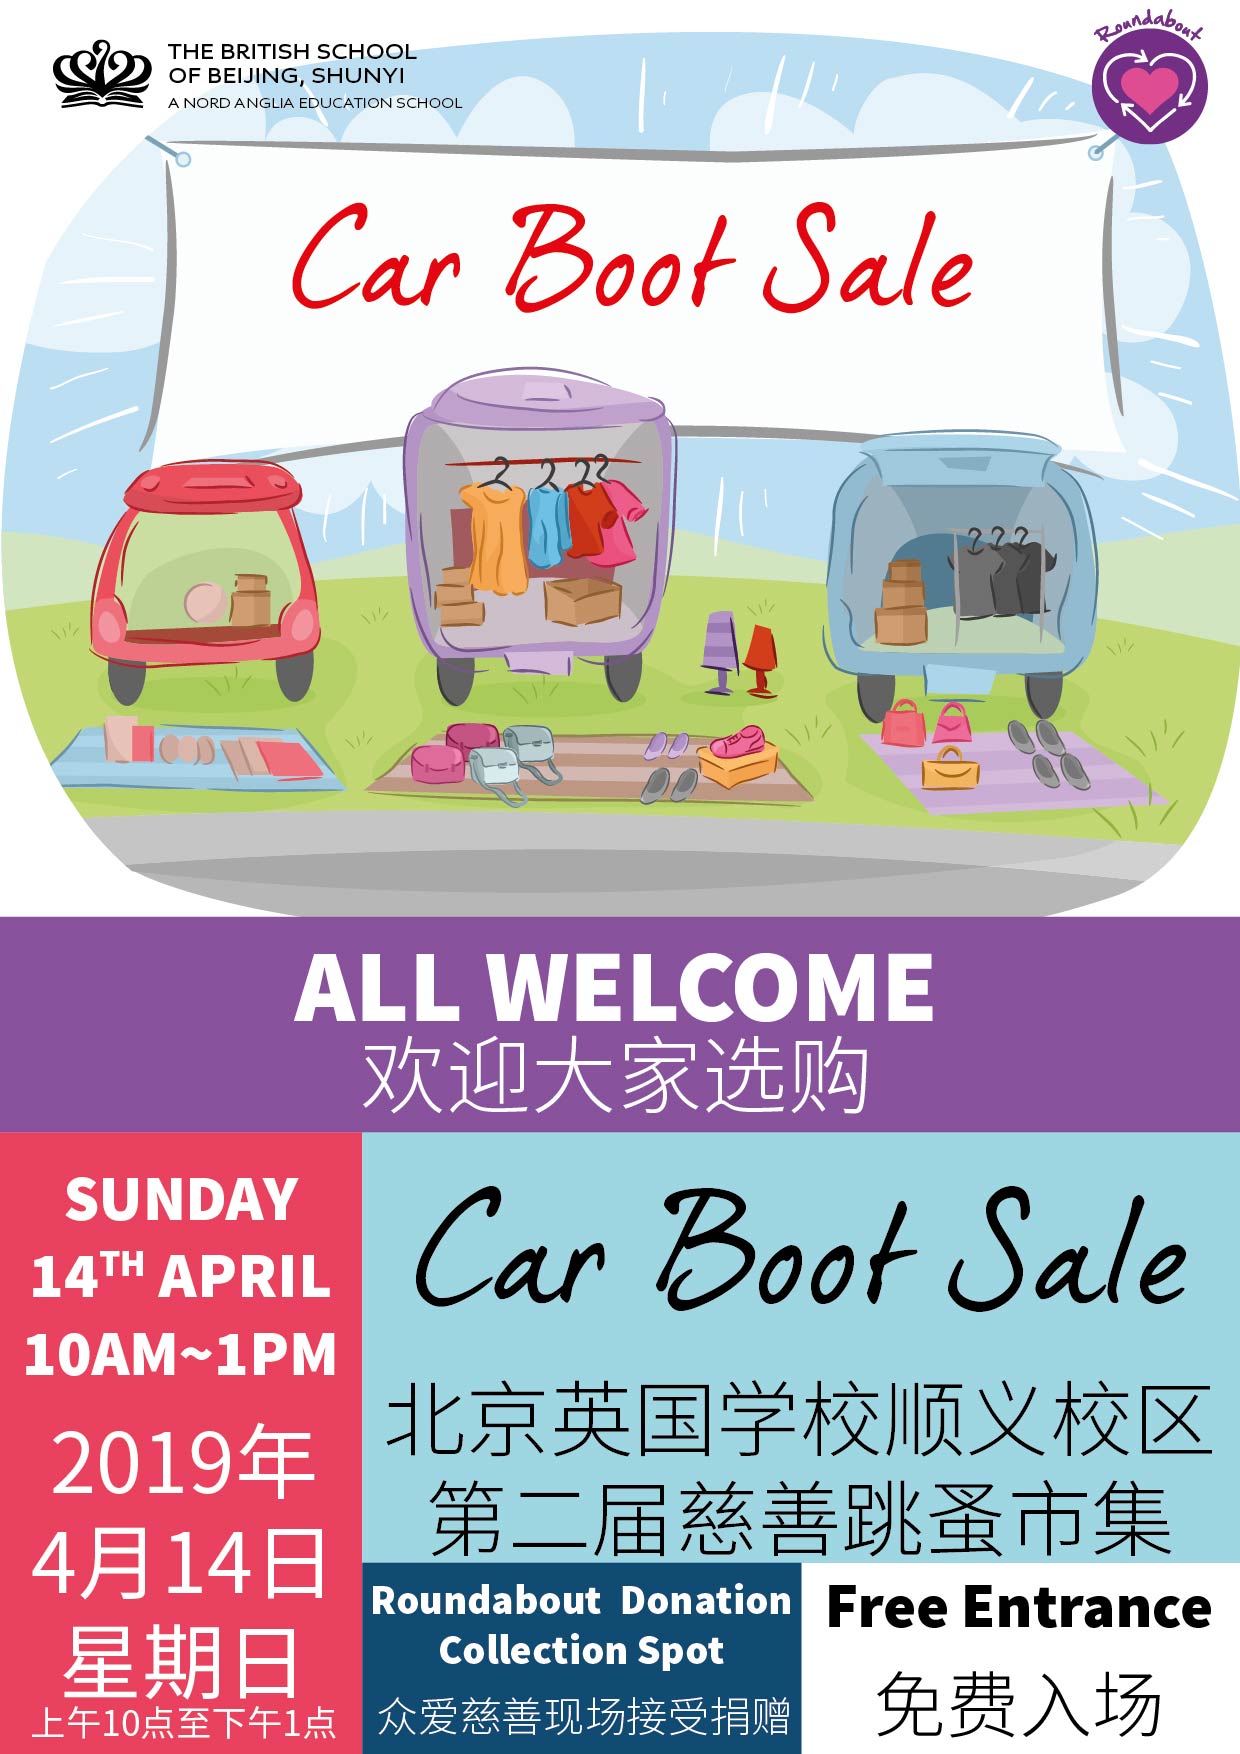 BSB Shunyi Car Boot Sale